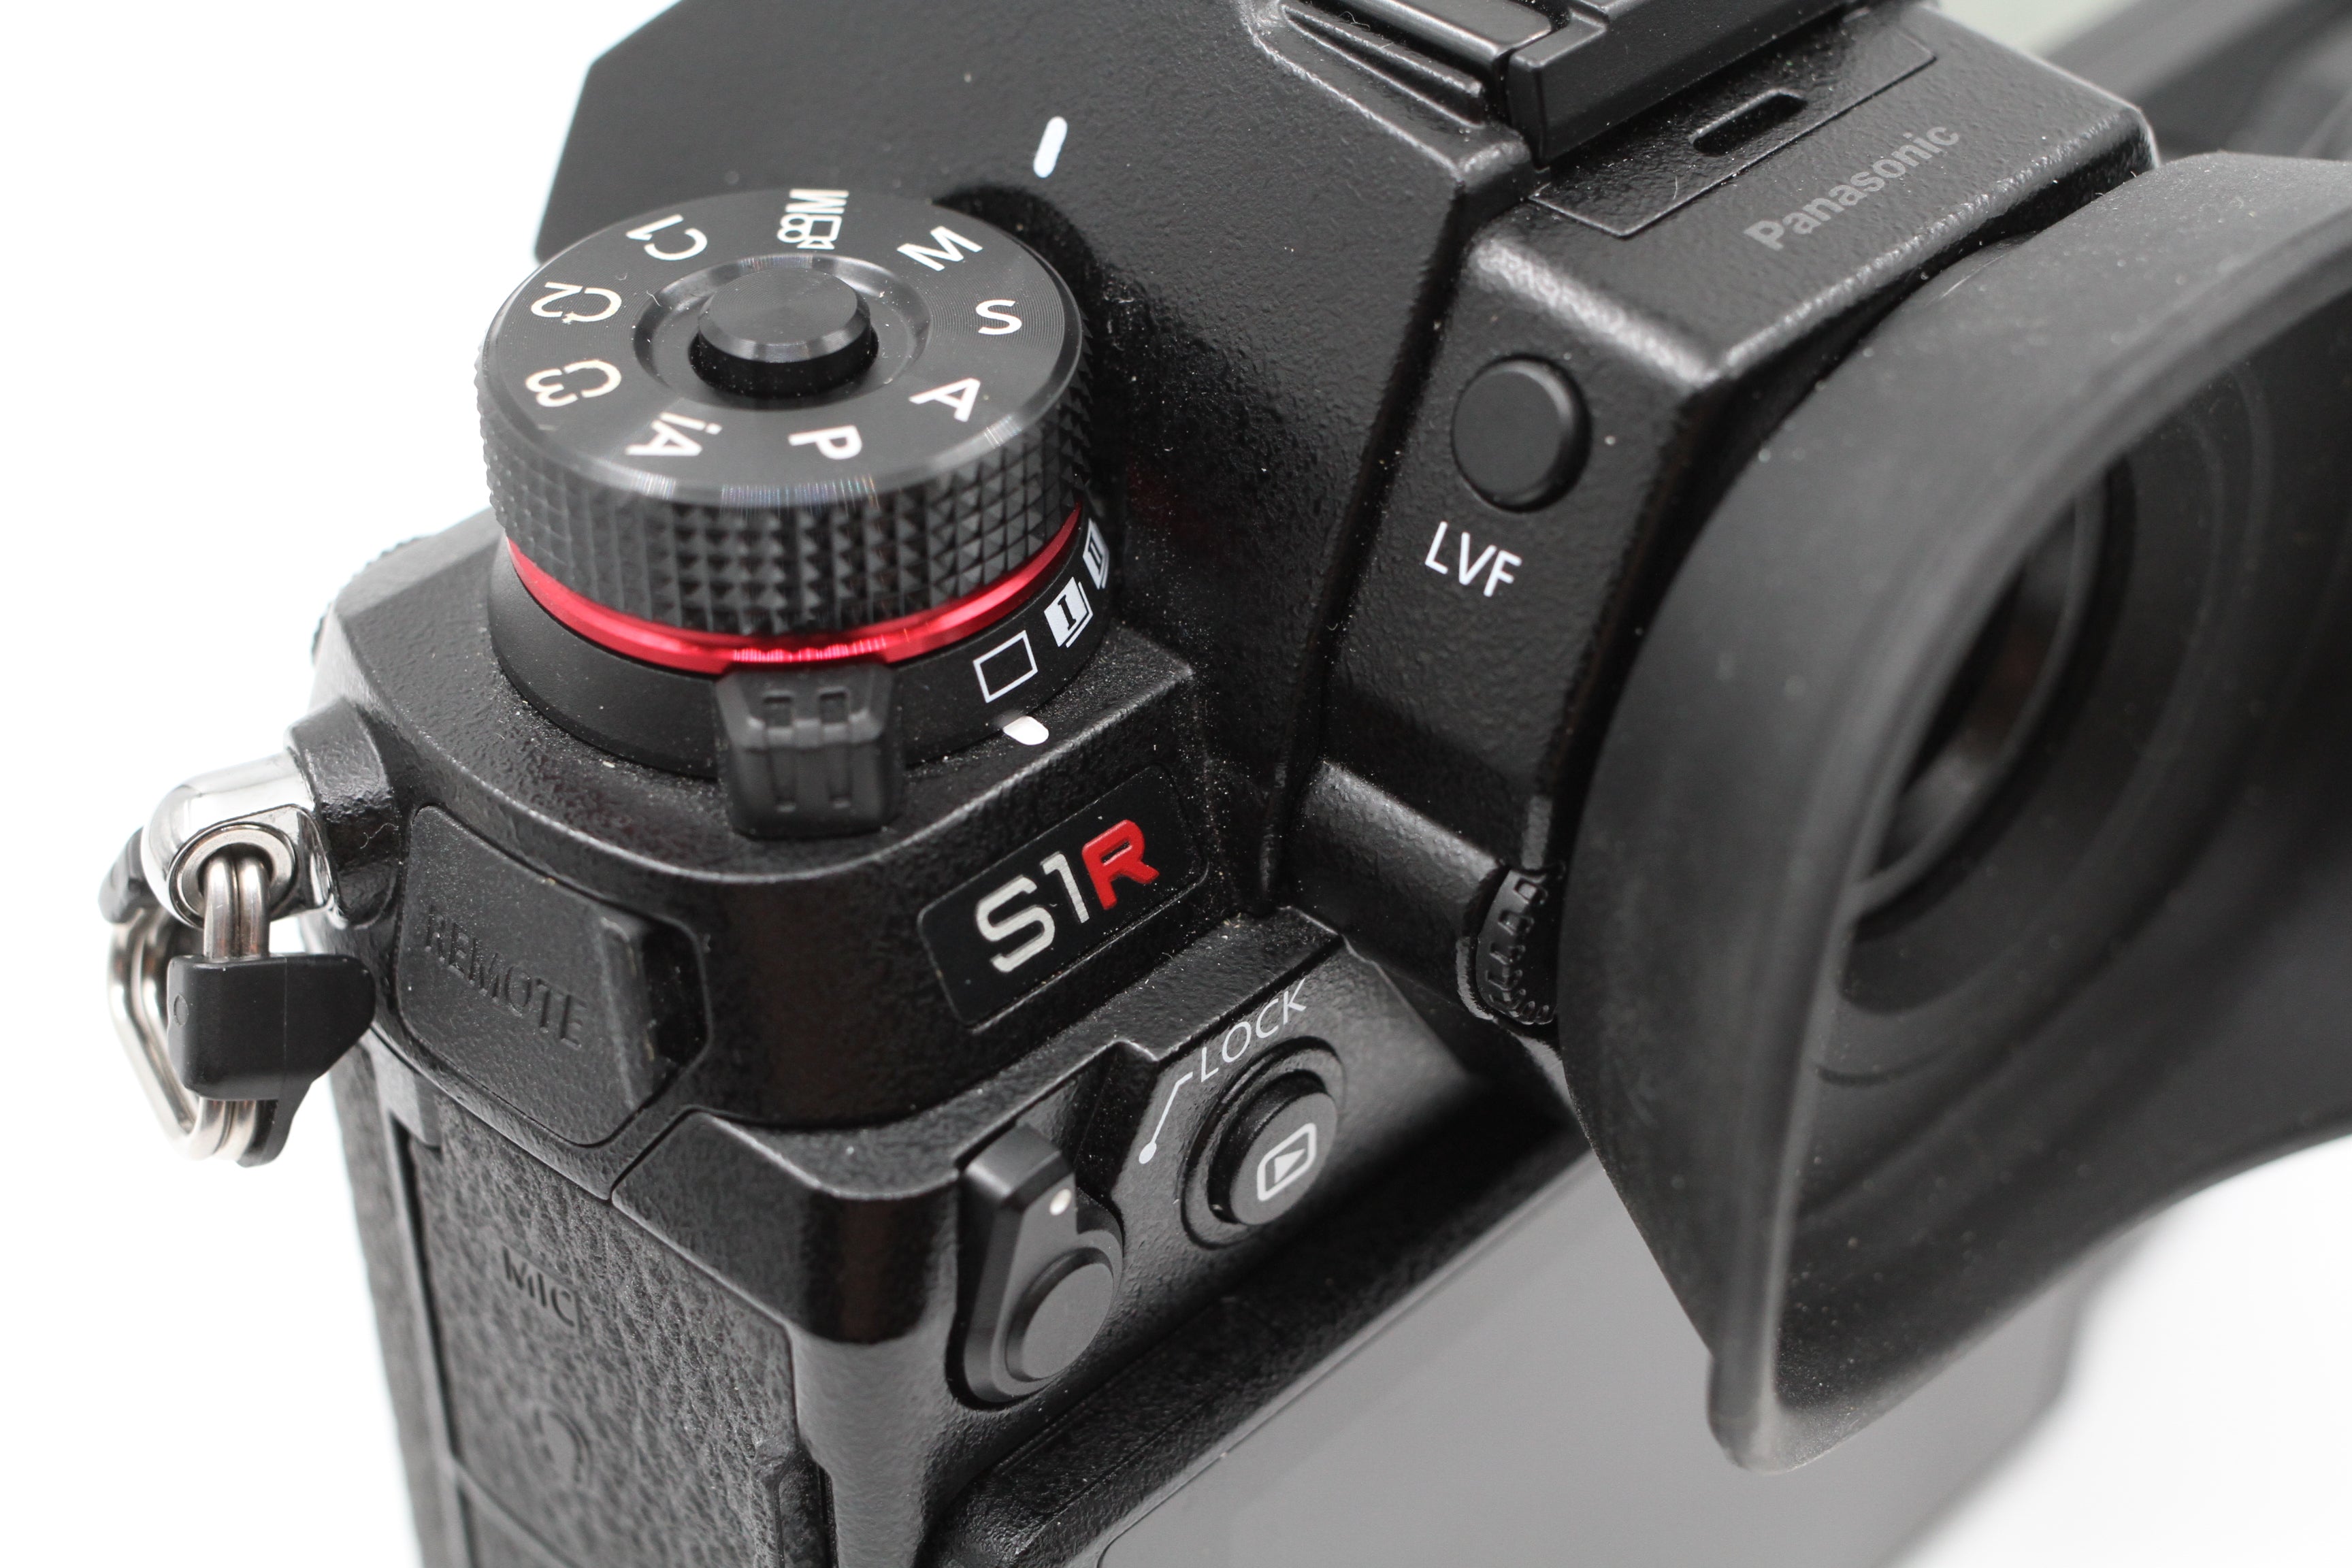 Panasonic Lumix S1R Full Frame L-Mount Mirrorless Camera Body, Boxed